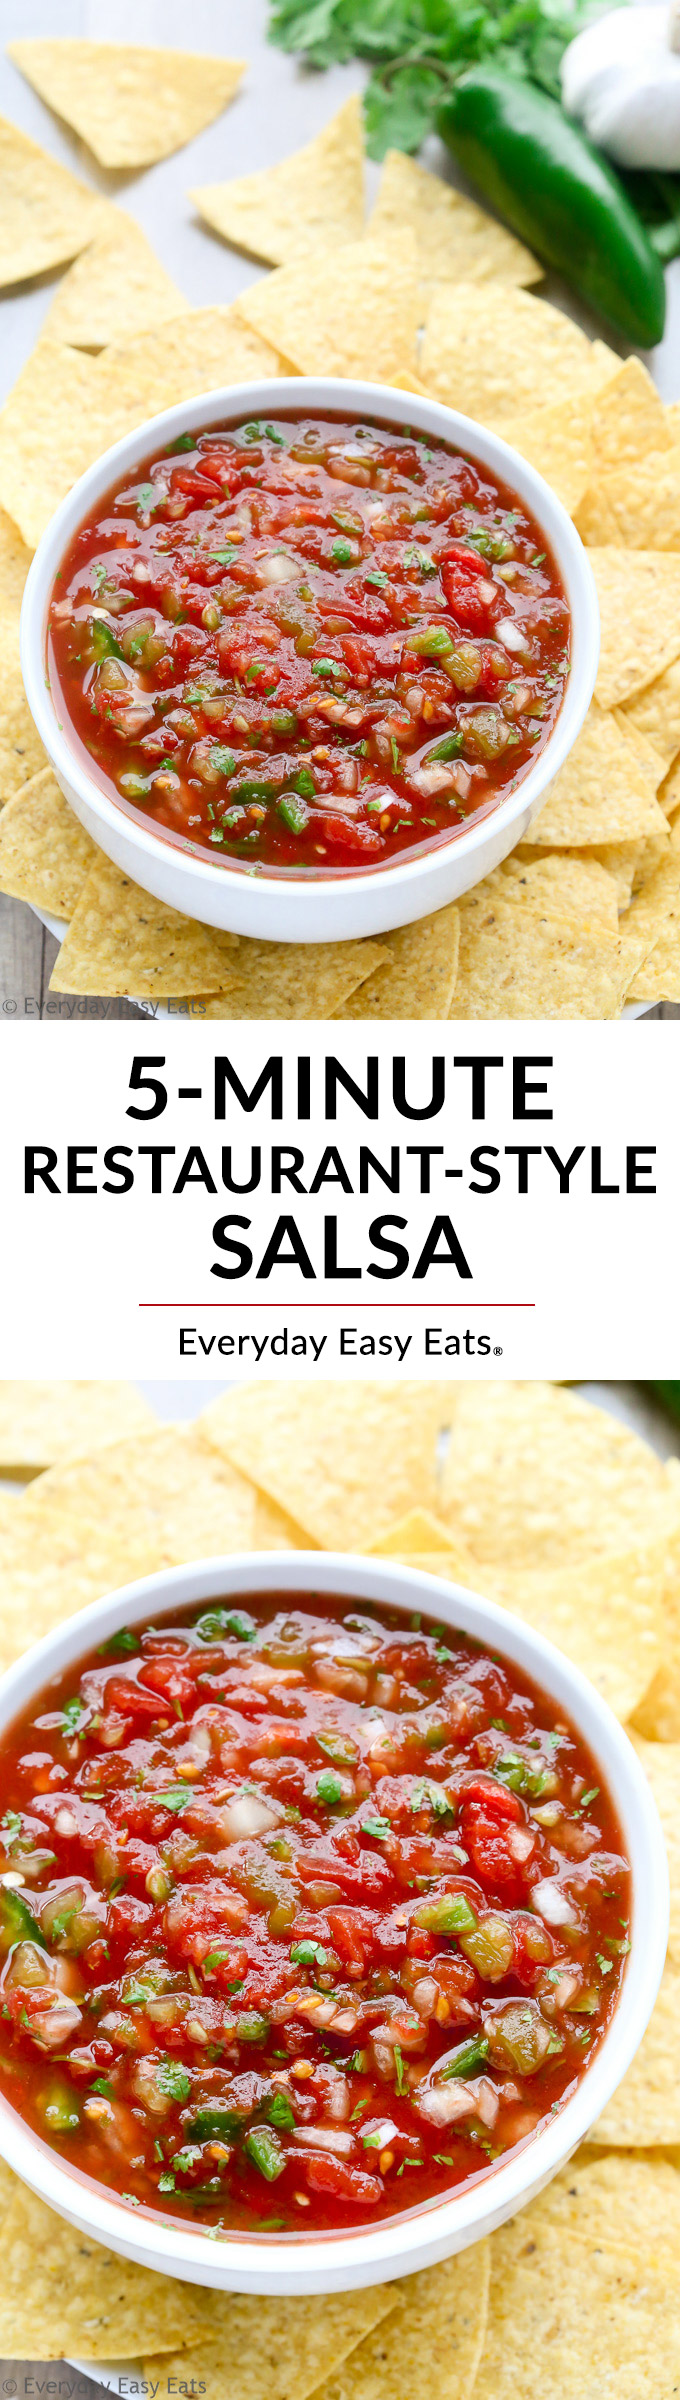 Easy 5-Minute Restaurant-Style Salsa | Recipe at EverydayEasyEats.com